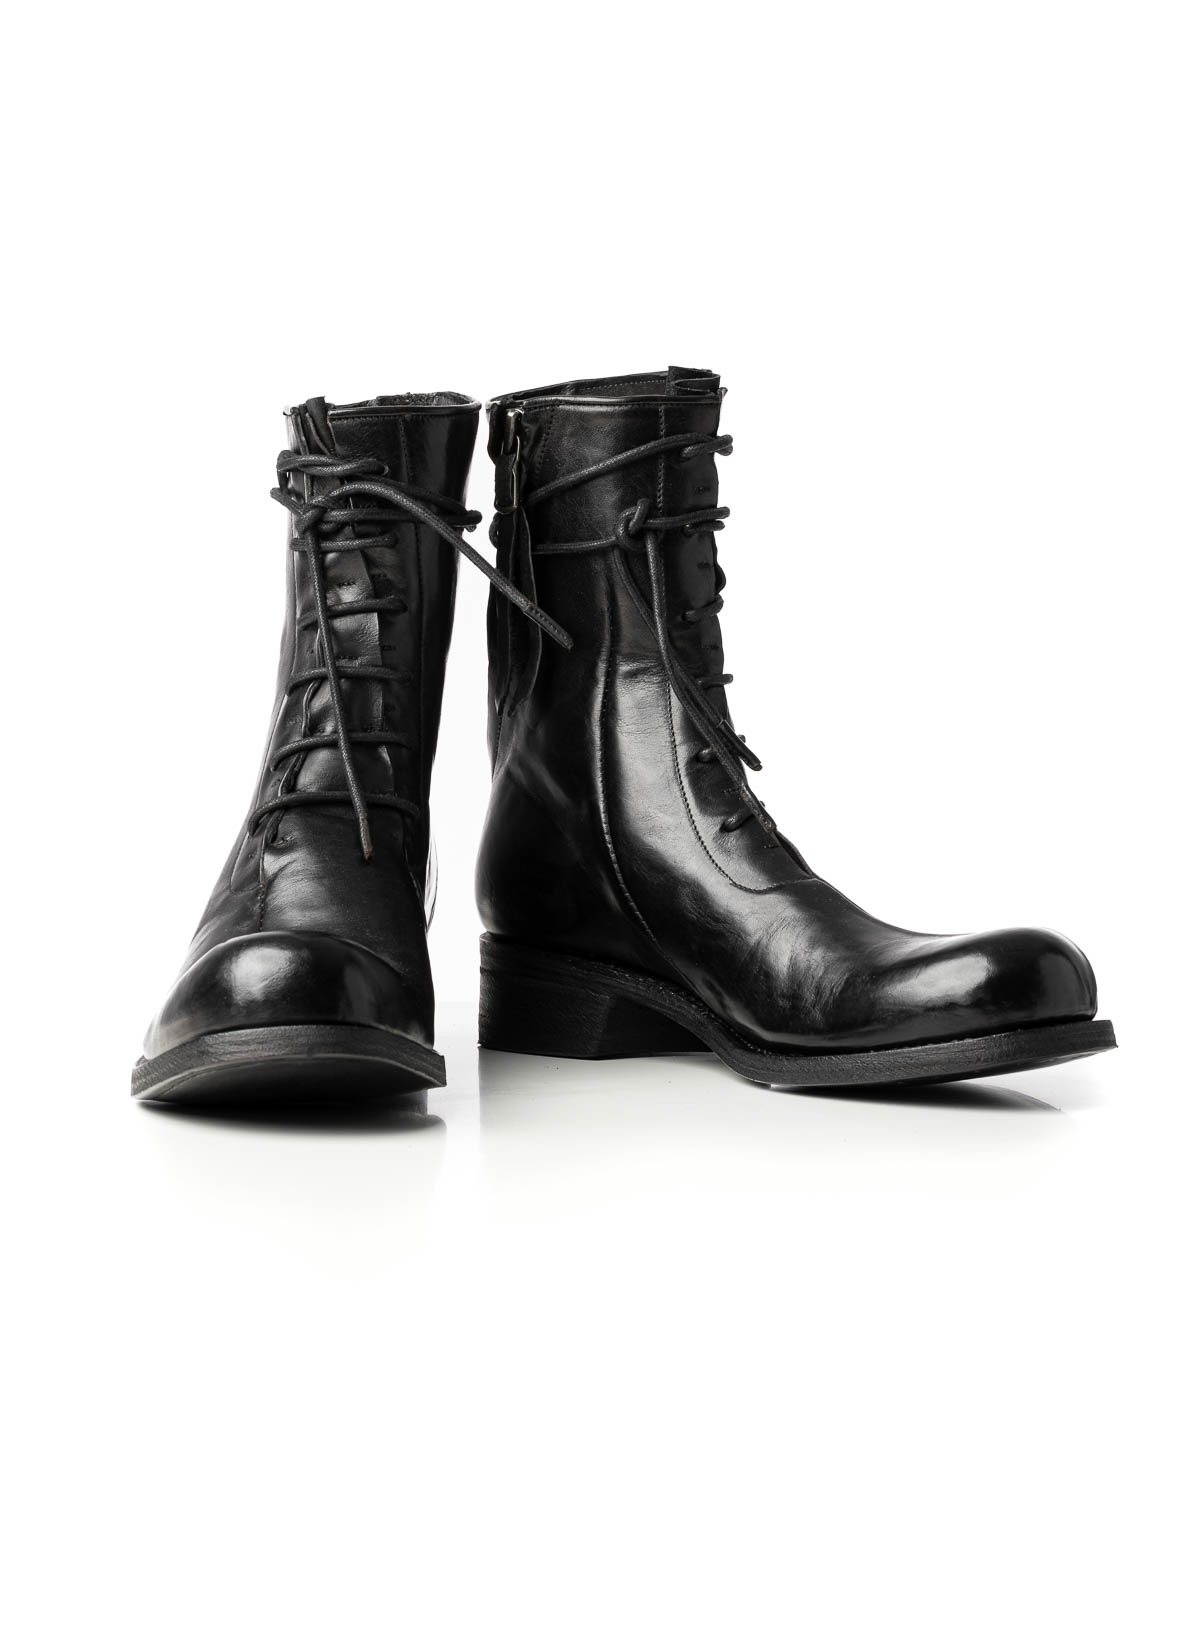 black combat work boots